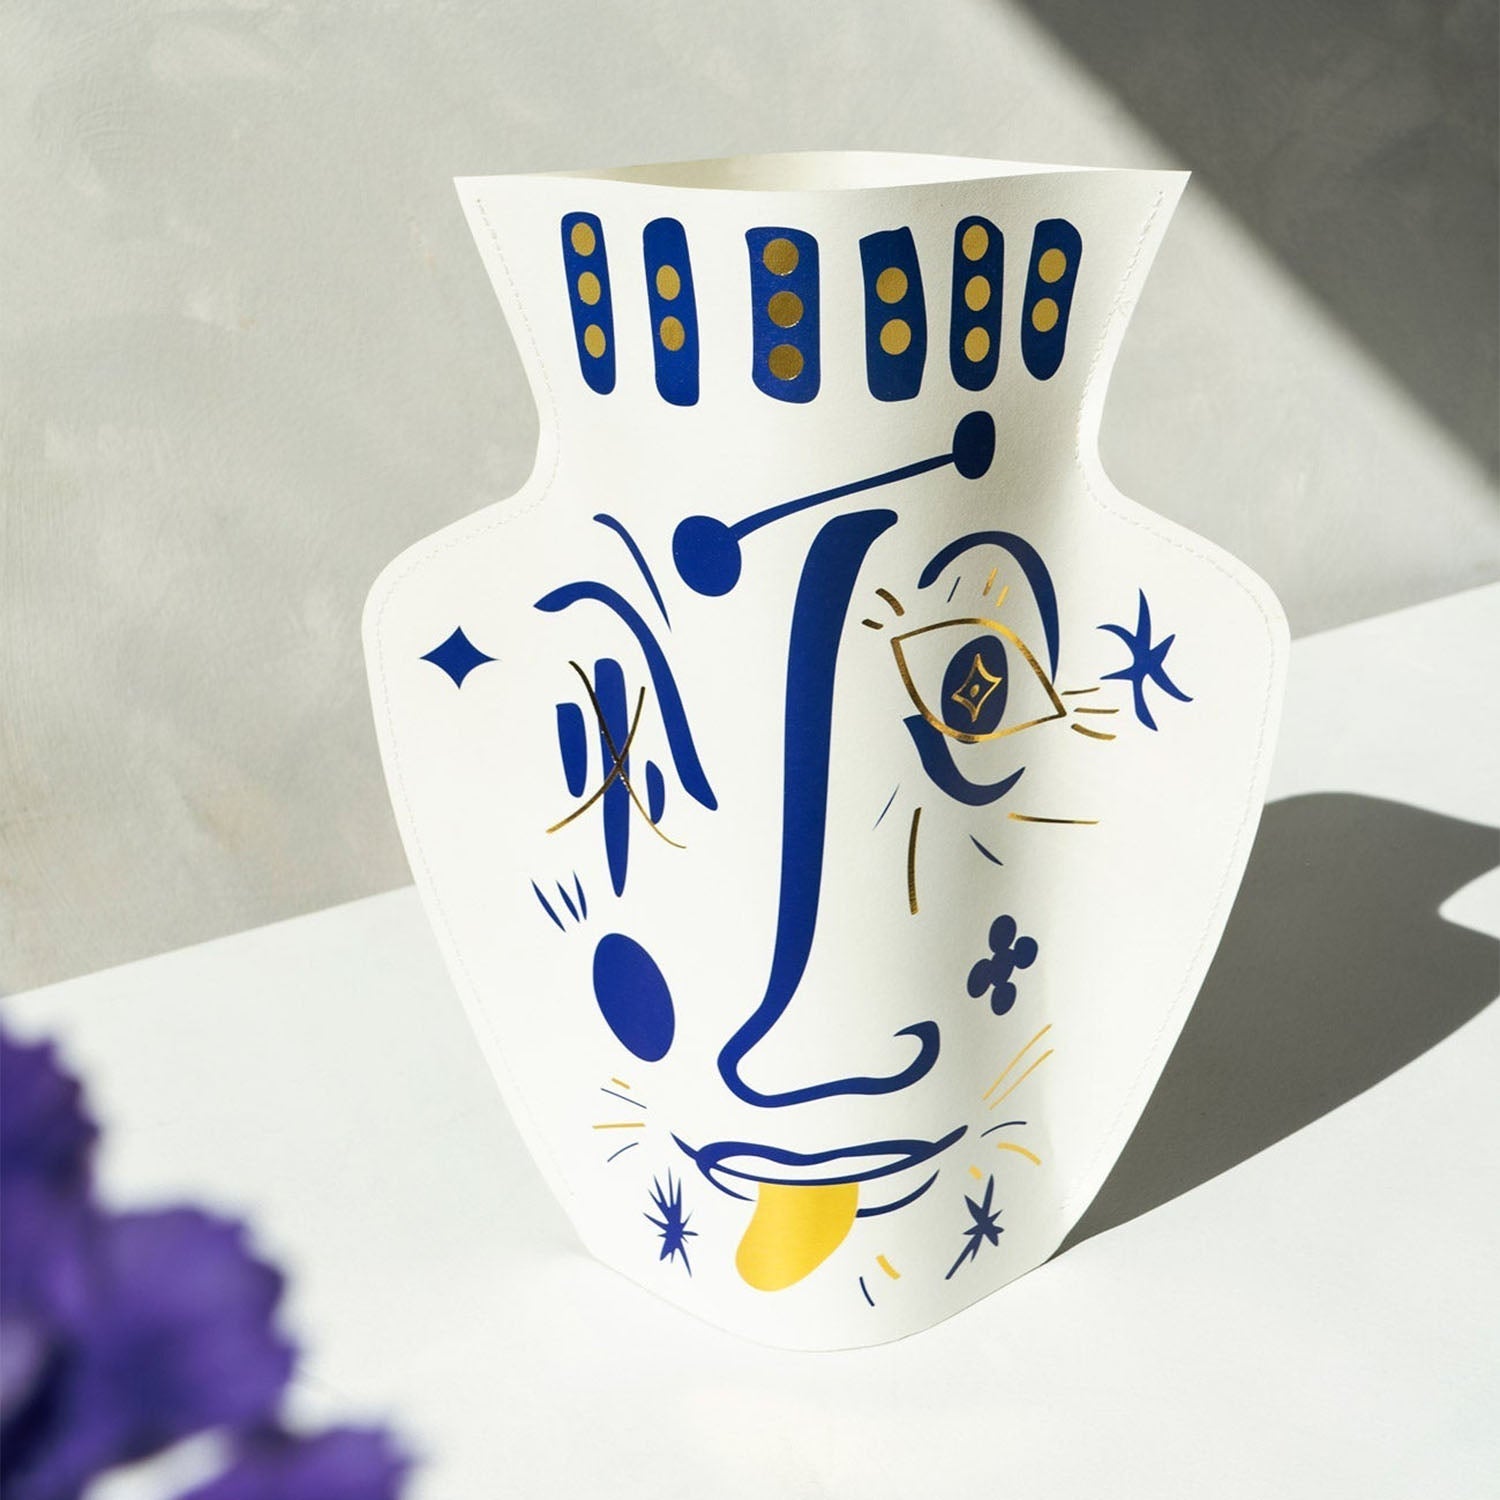 Jaime Hayon Paper Vase by OCTAEVO